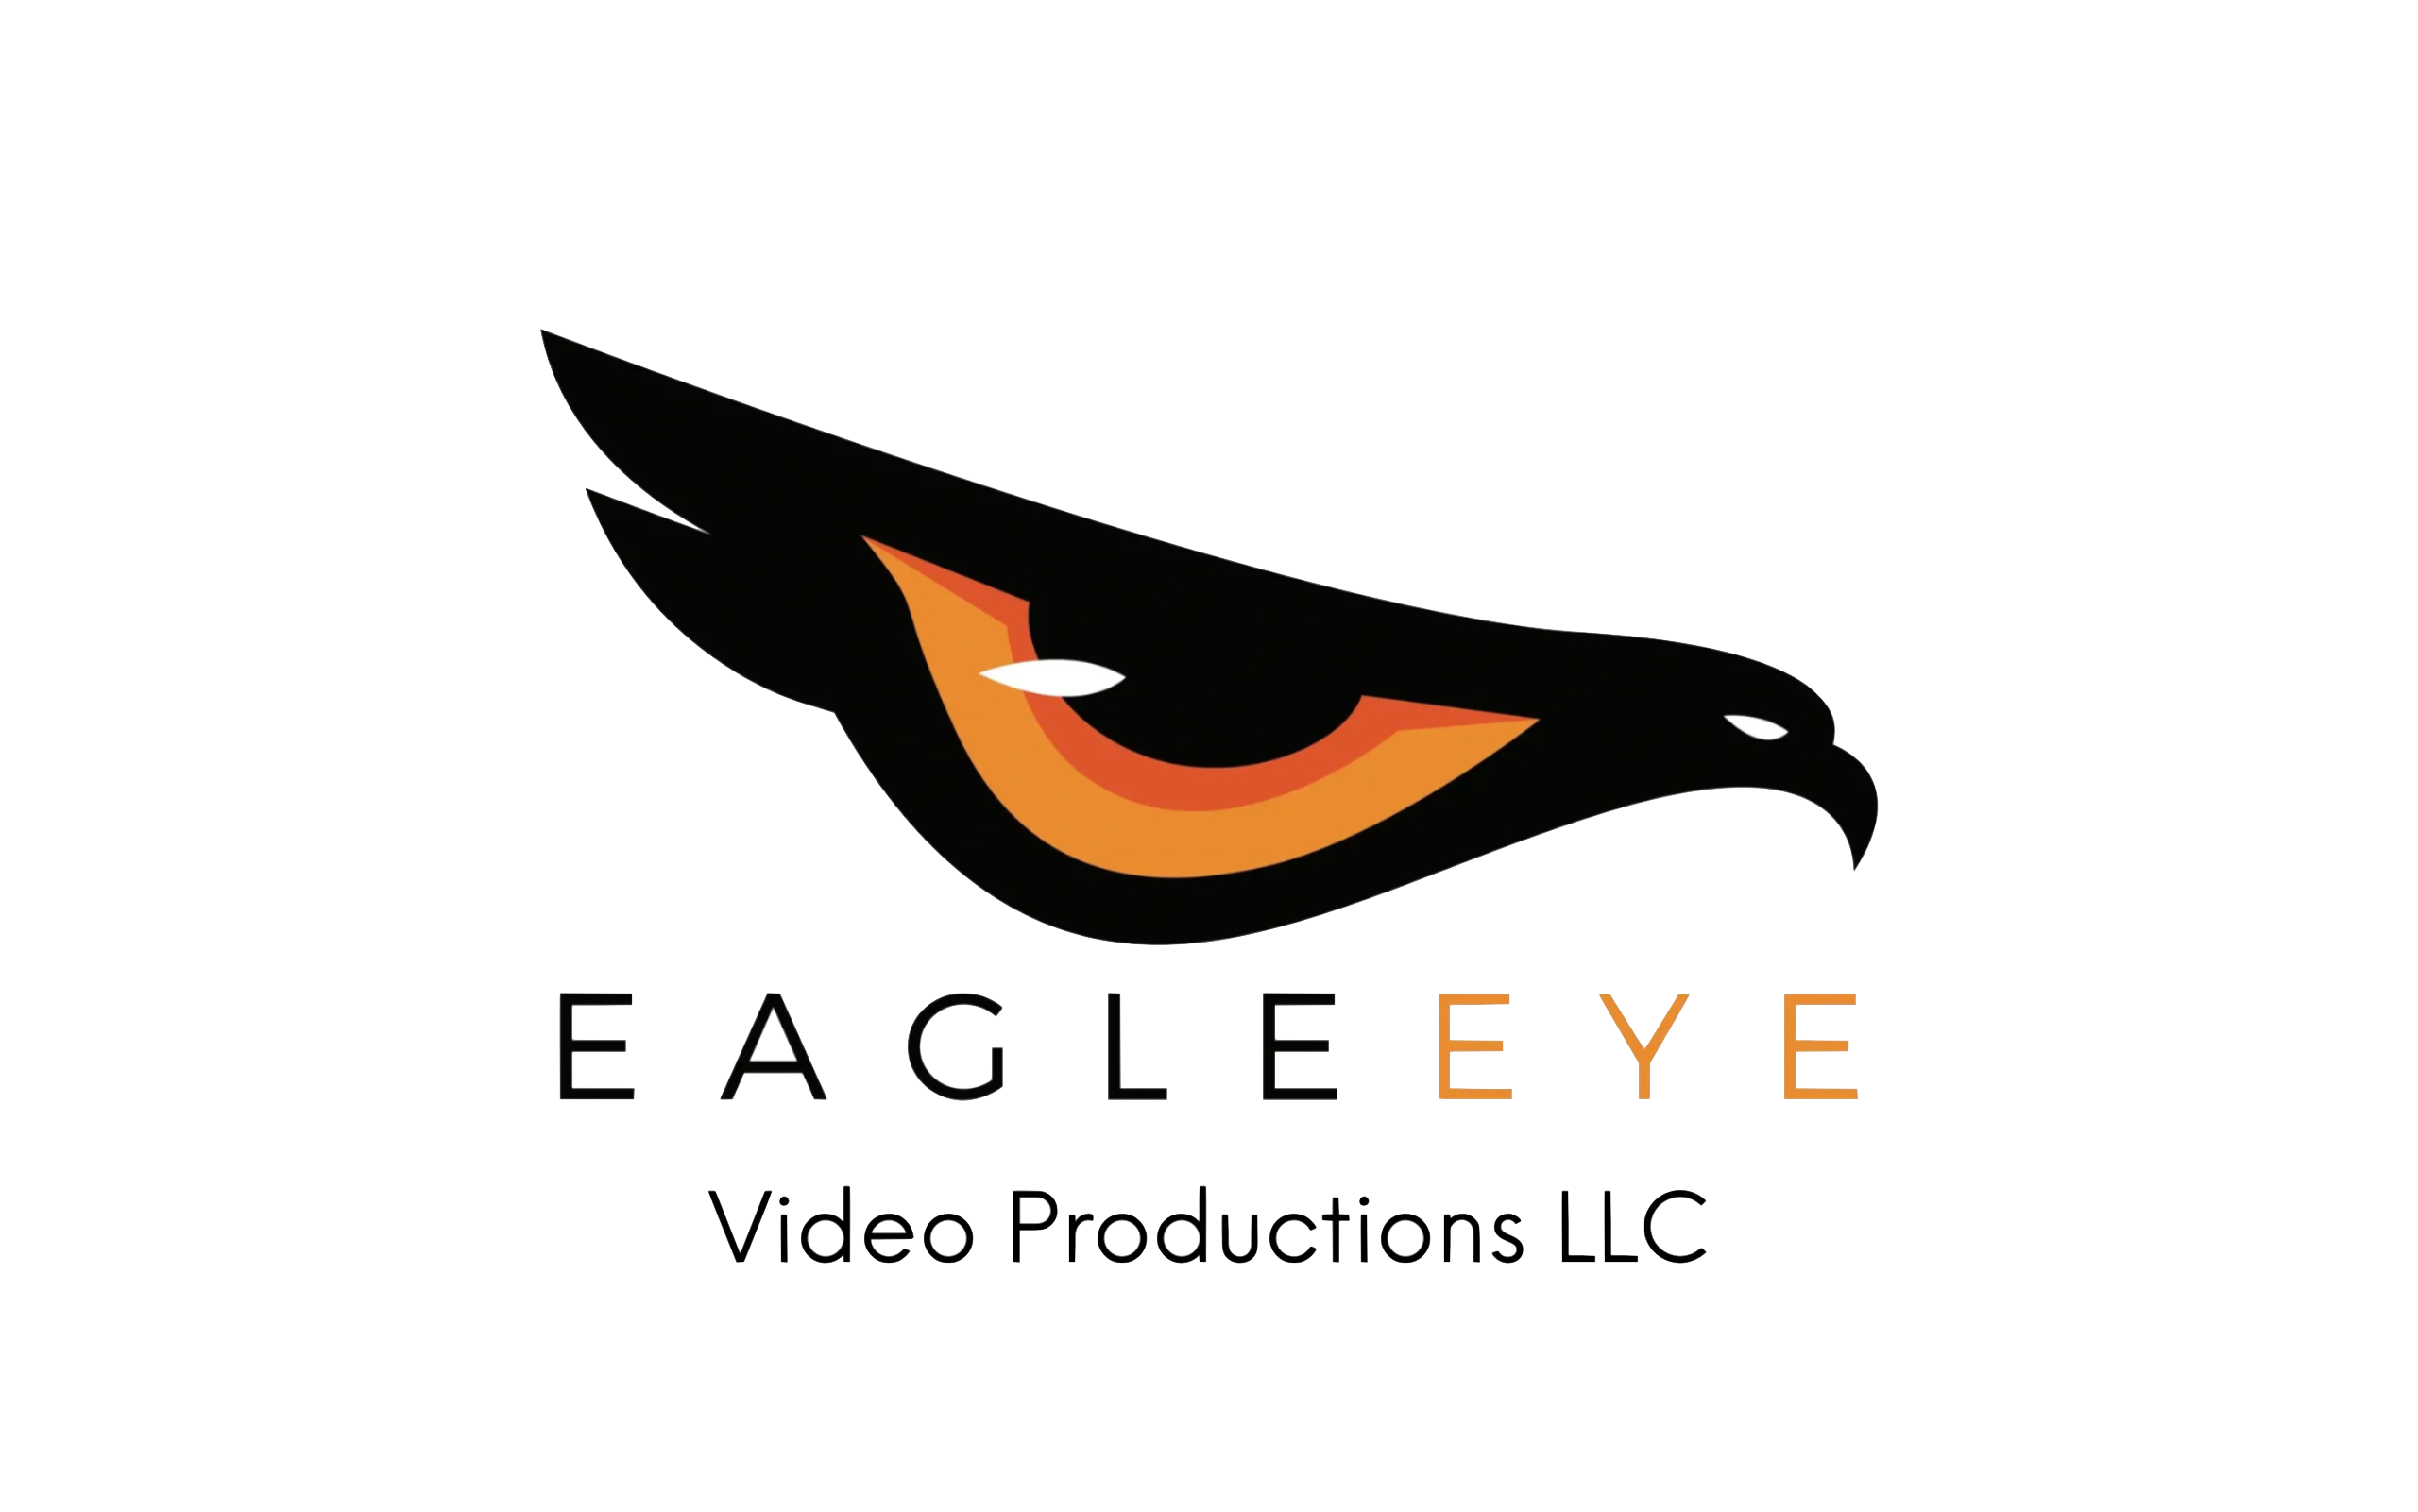 Eagle Eye Video Productions LLC